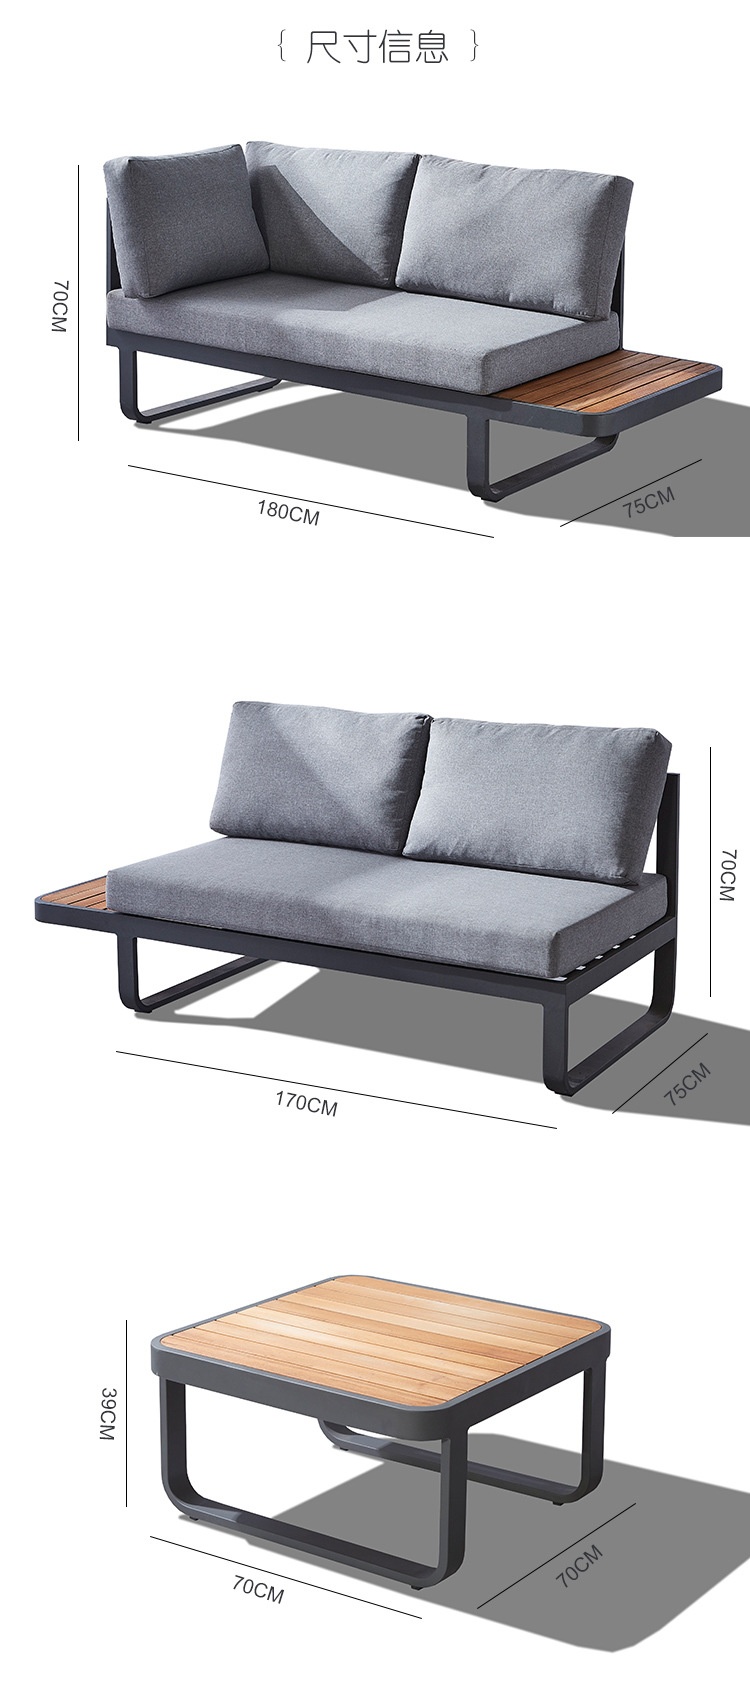 homegarden aluminium garden sofa set 3pcs-Garten Lounge set 3-teilig